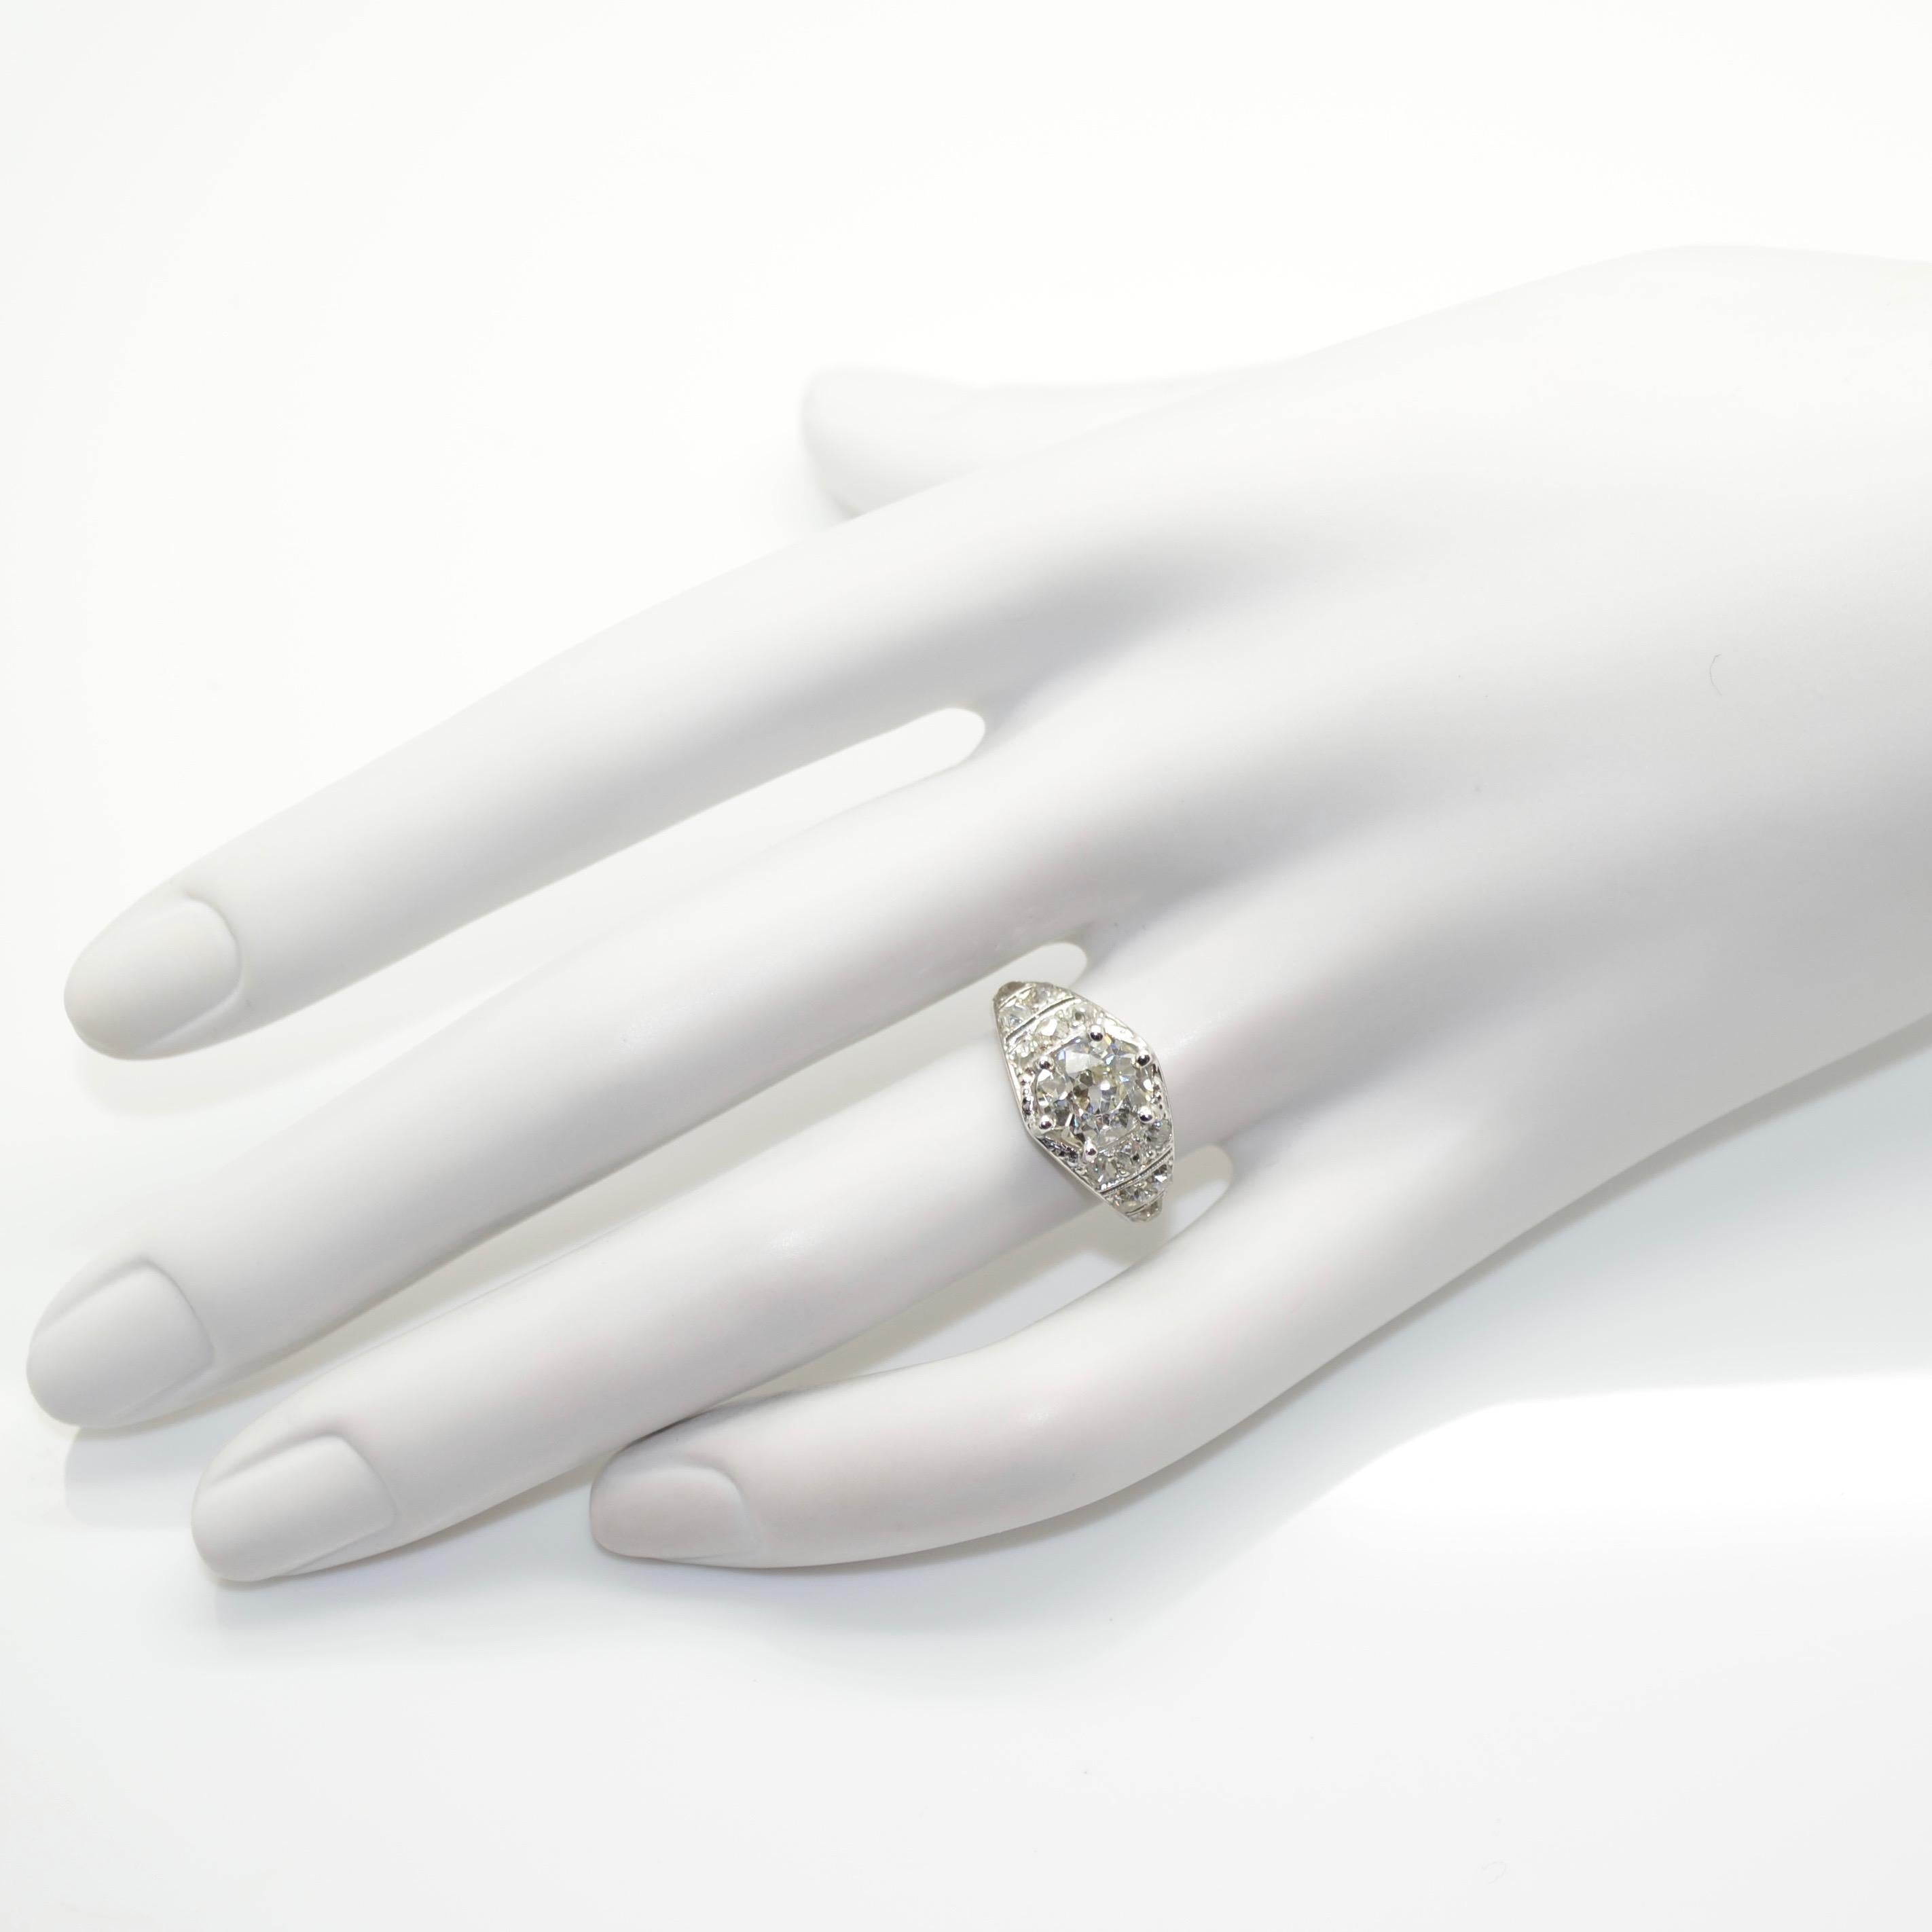 1920s French Art Deco 1.50 Carat Cushion Cut Diamond Platinum Ring For Sale 1